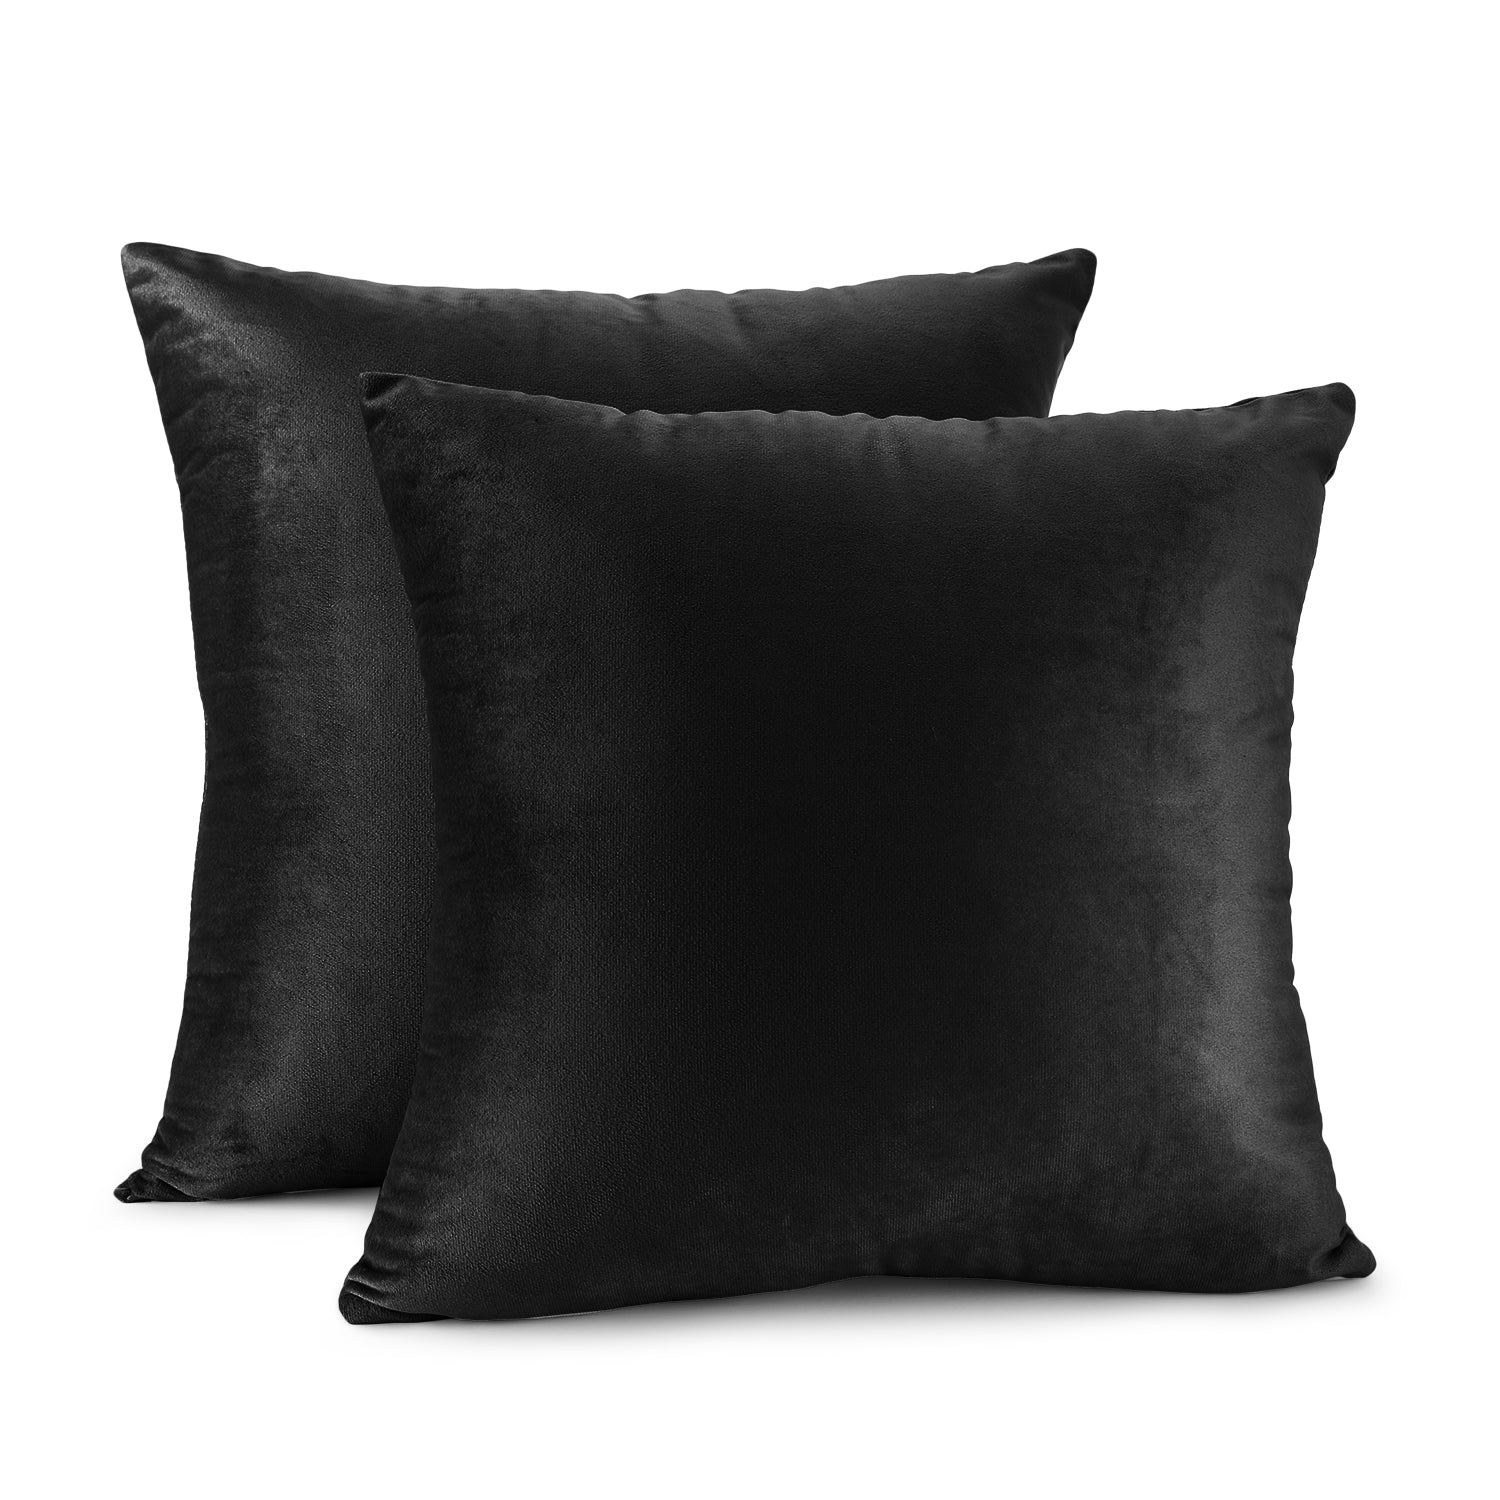 Charcoal Pintuck Throw Pillow